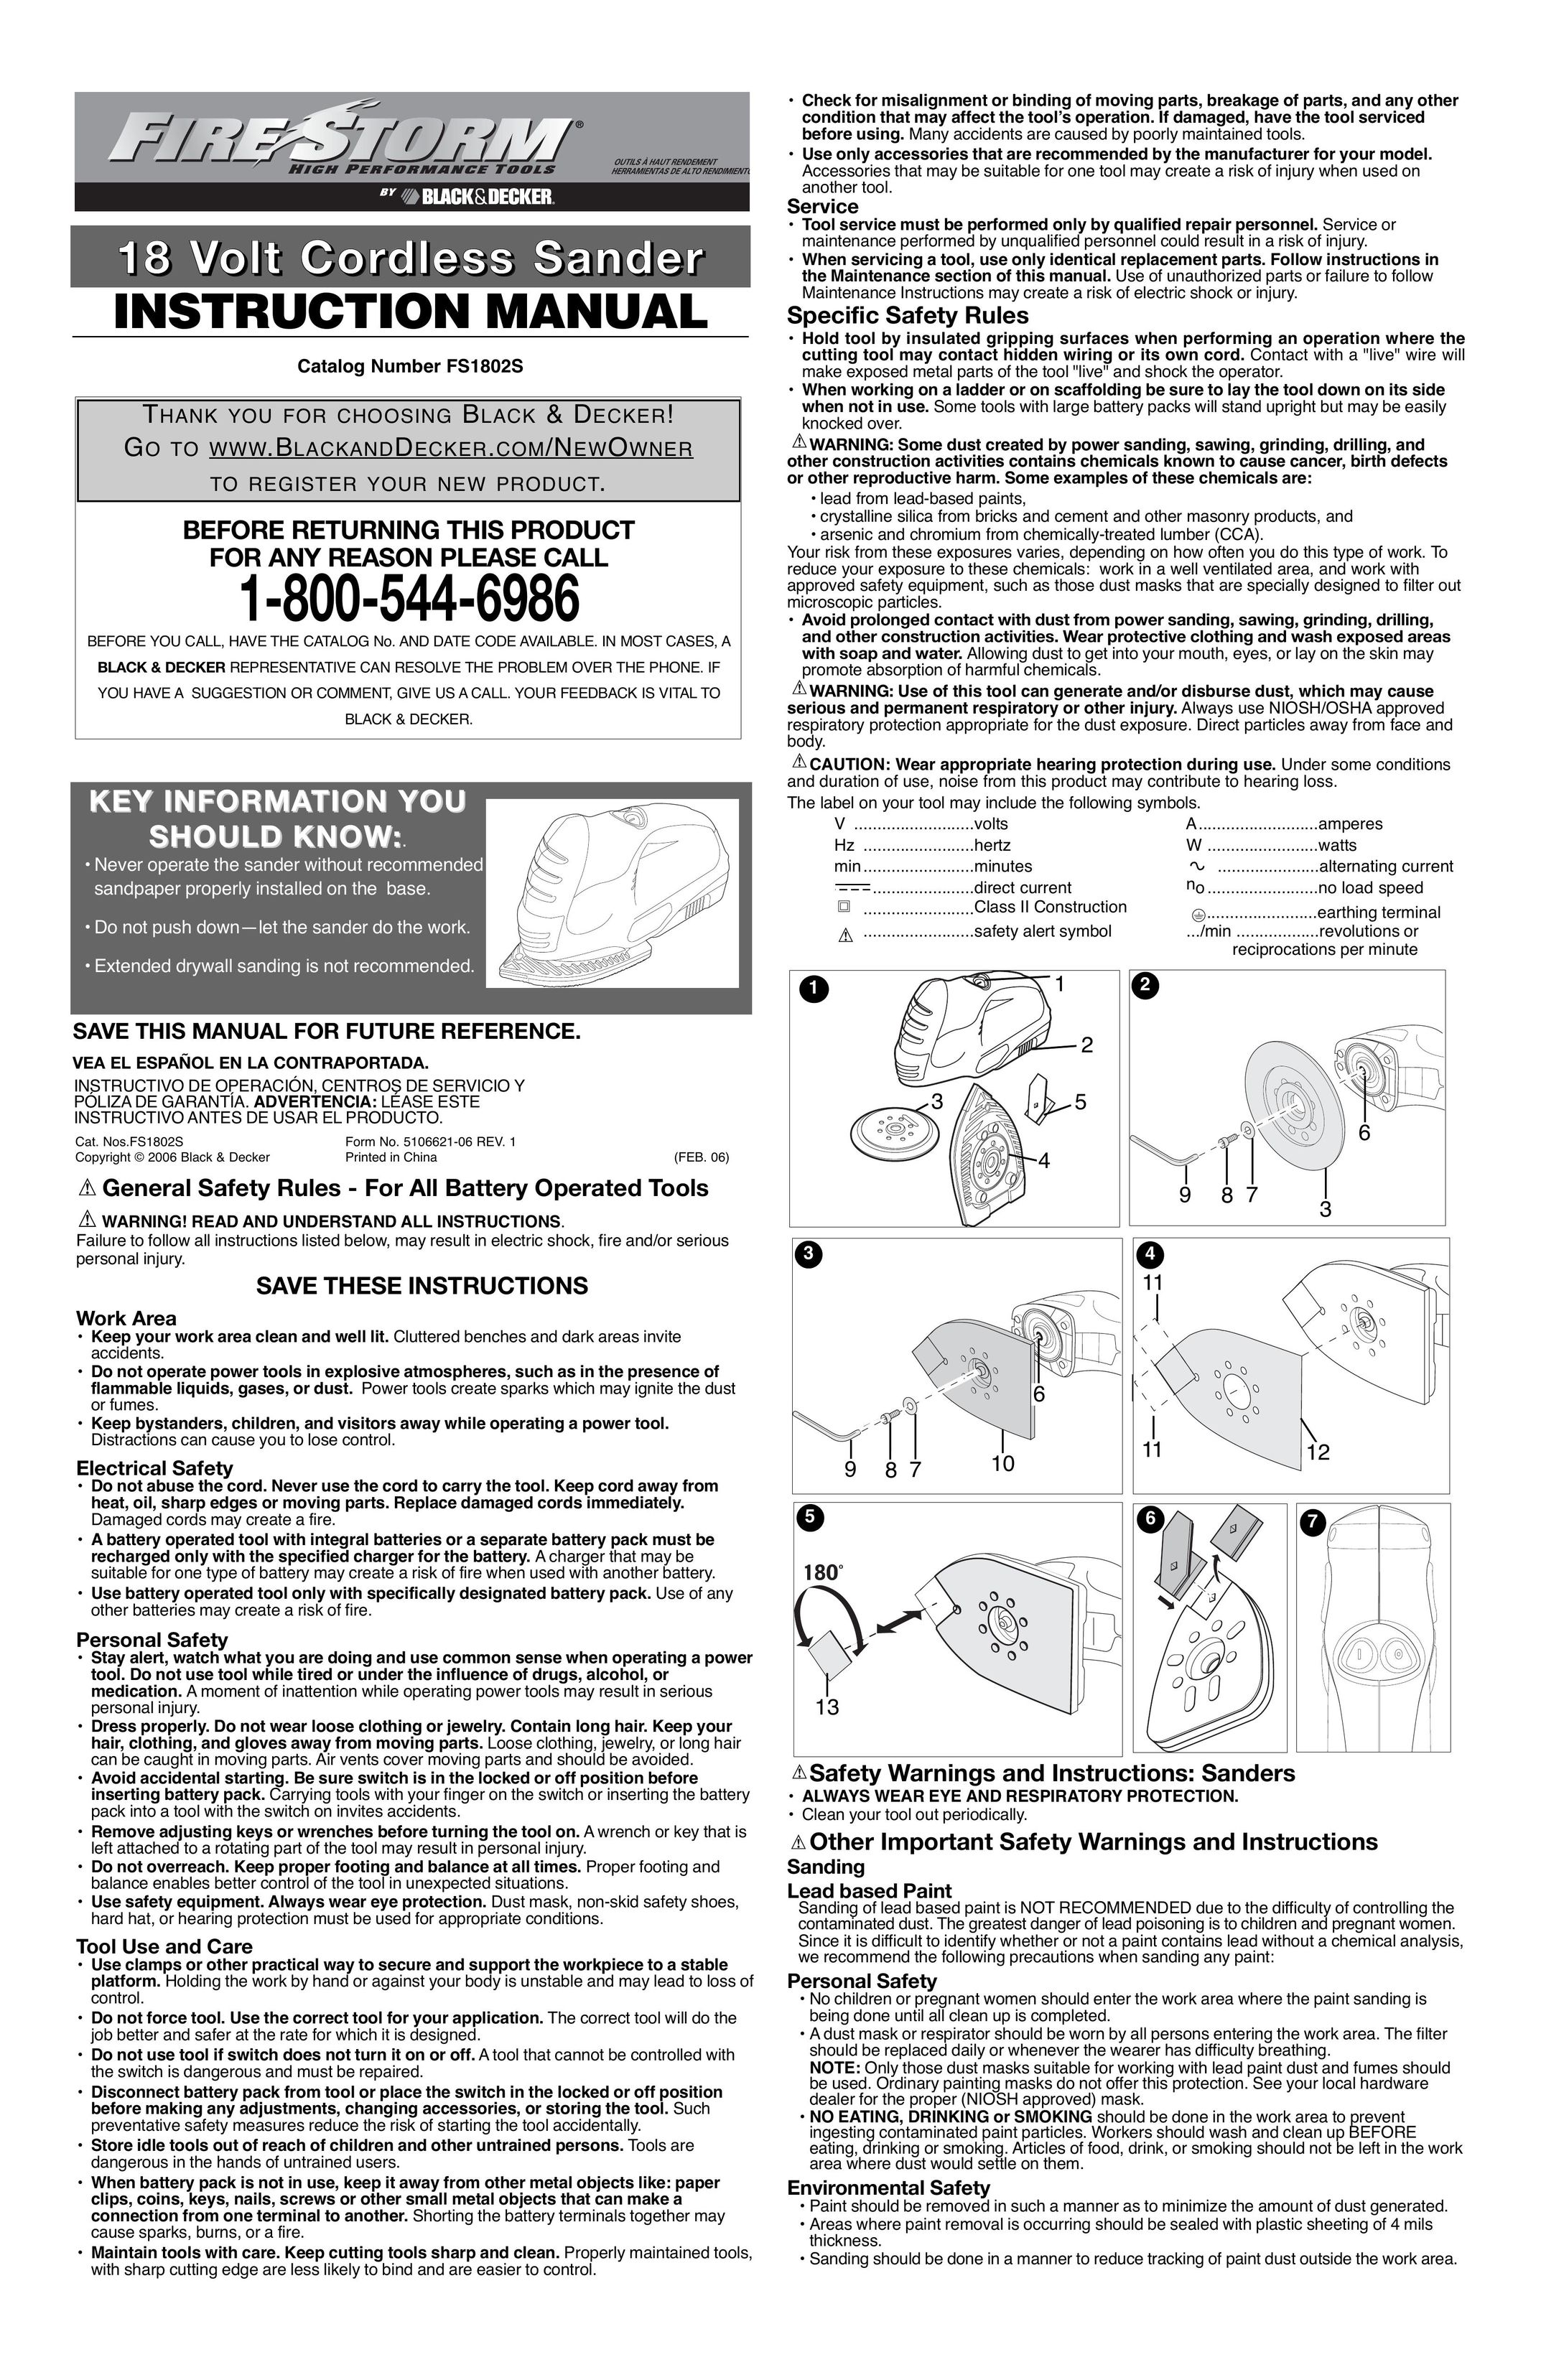 Black & Decker 5106621-06 Cordless Sander User Manual